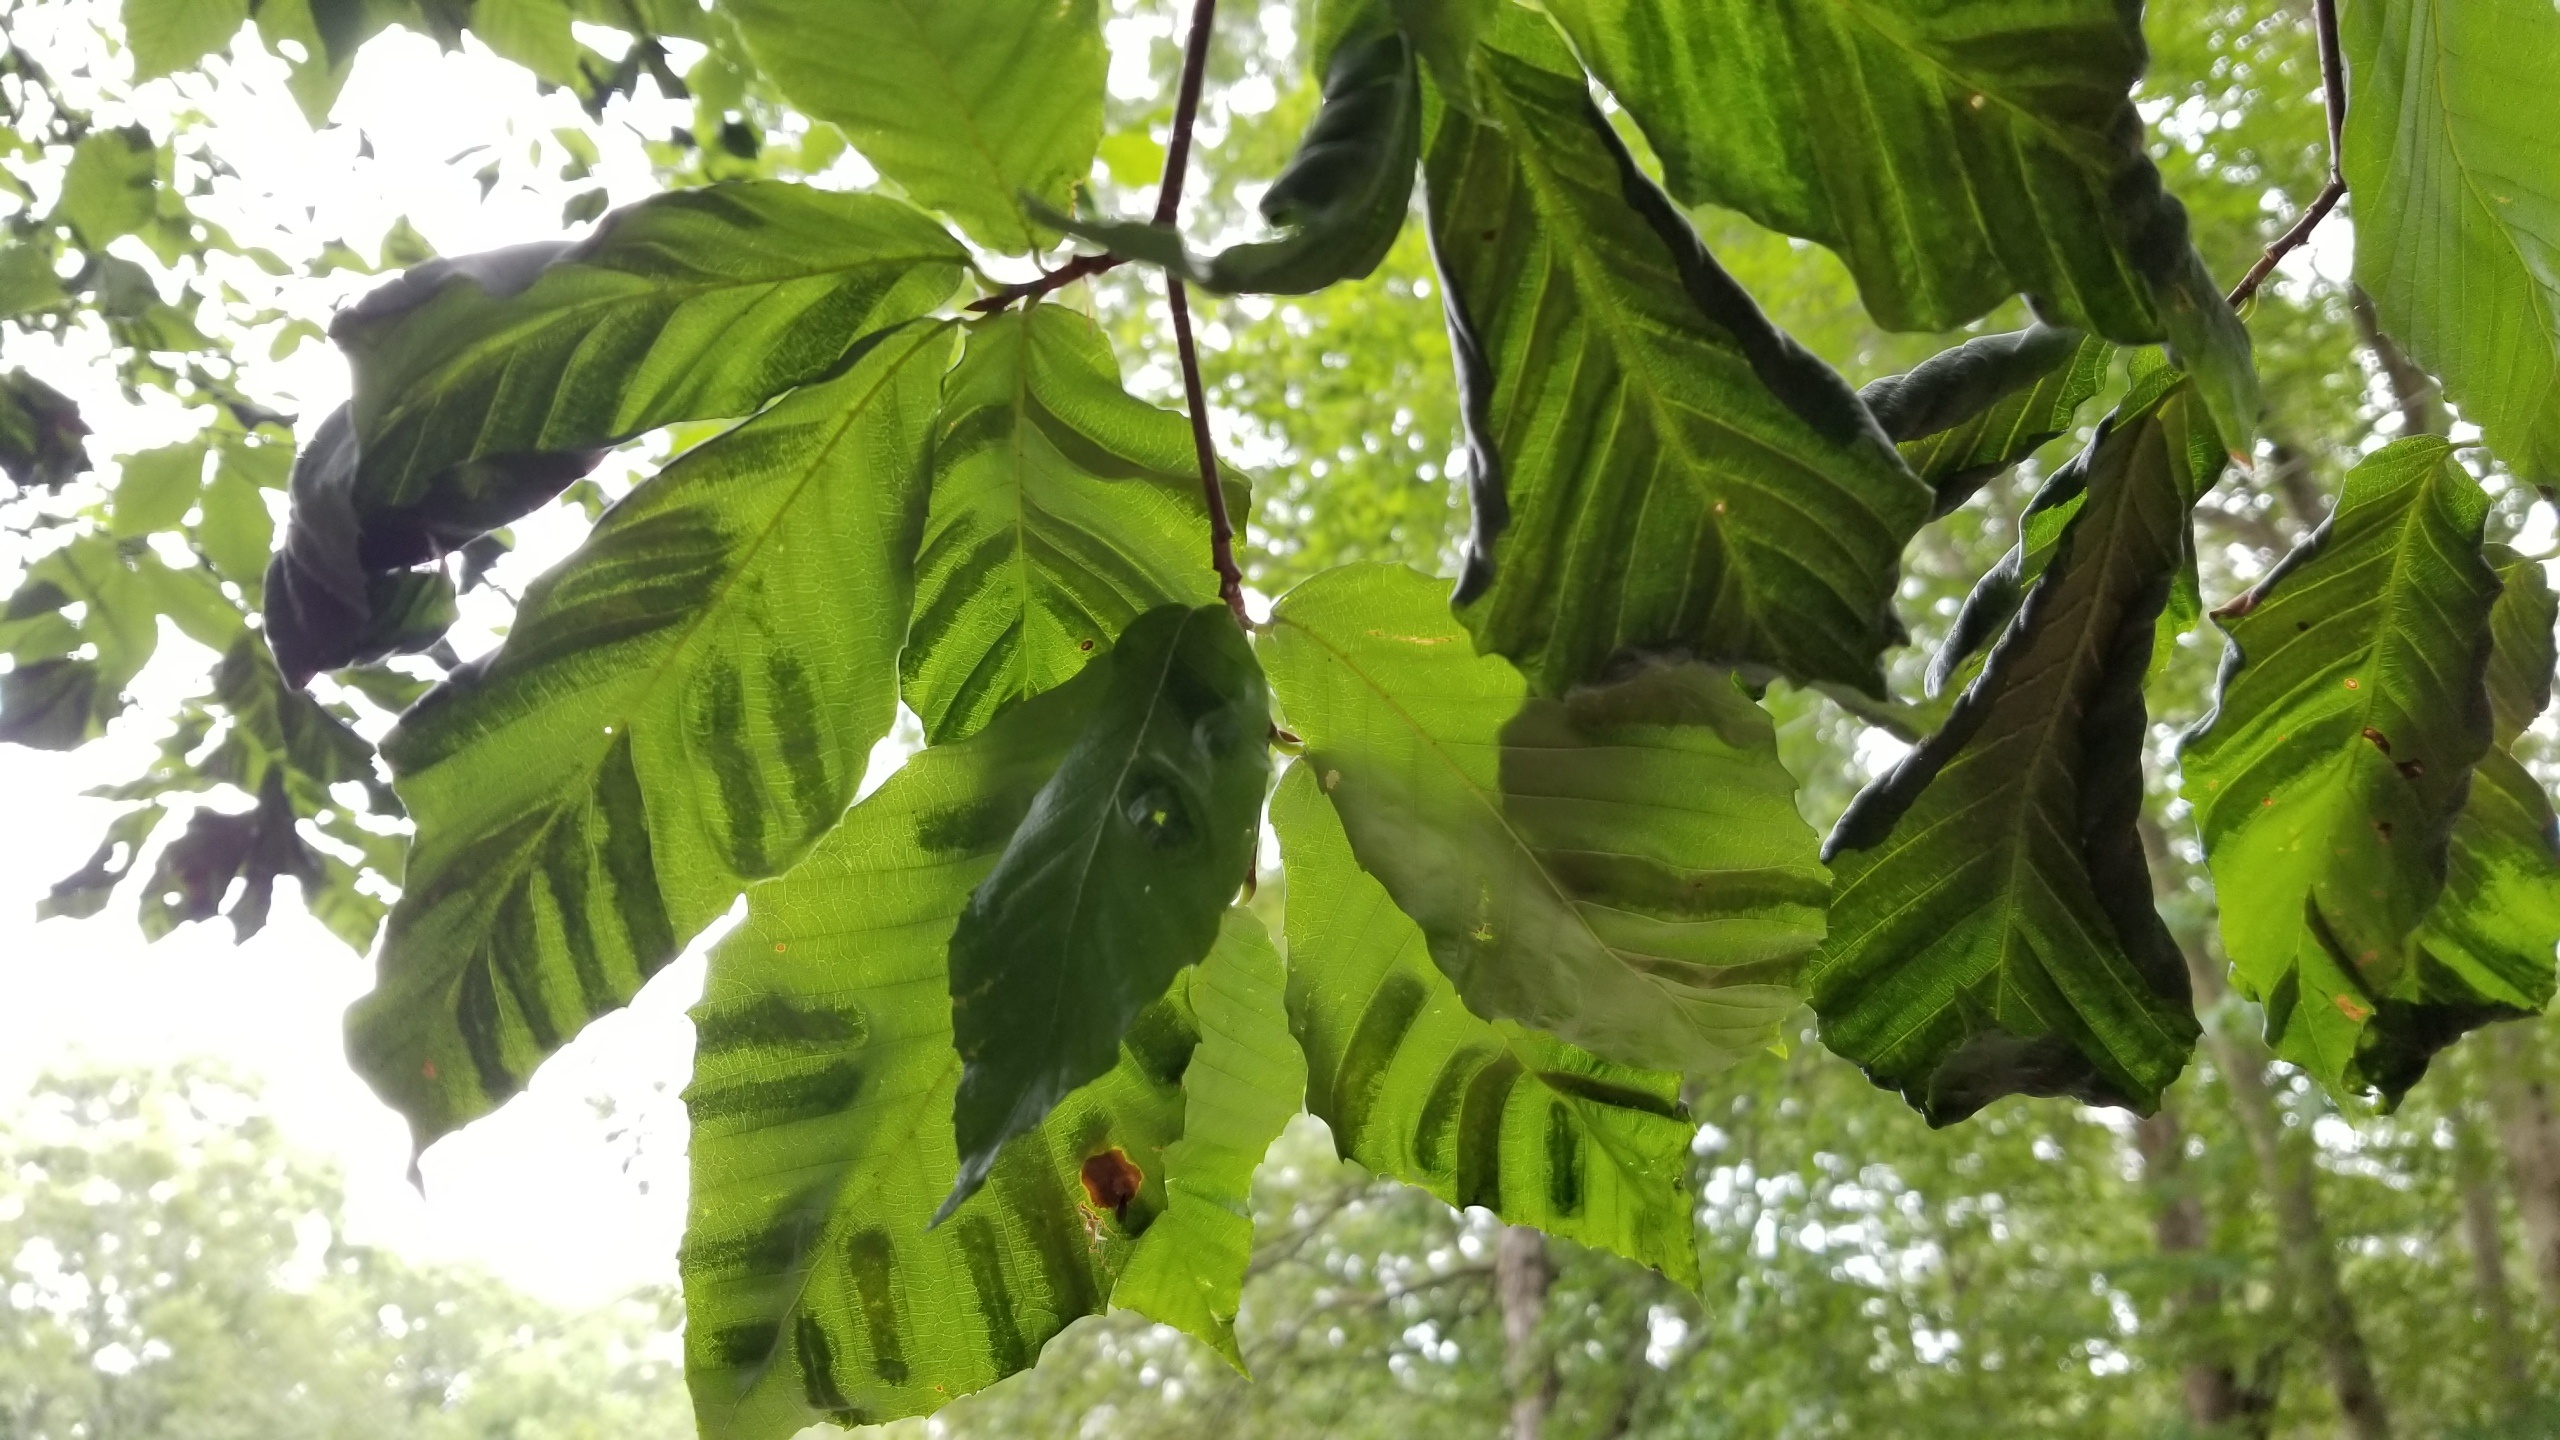 Beech leaf disease, Threat to local beech trees, URI researcher's warning, Nature's battle, 2560x1440 HD Desktop